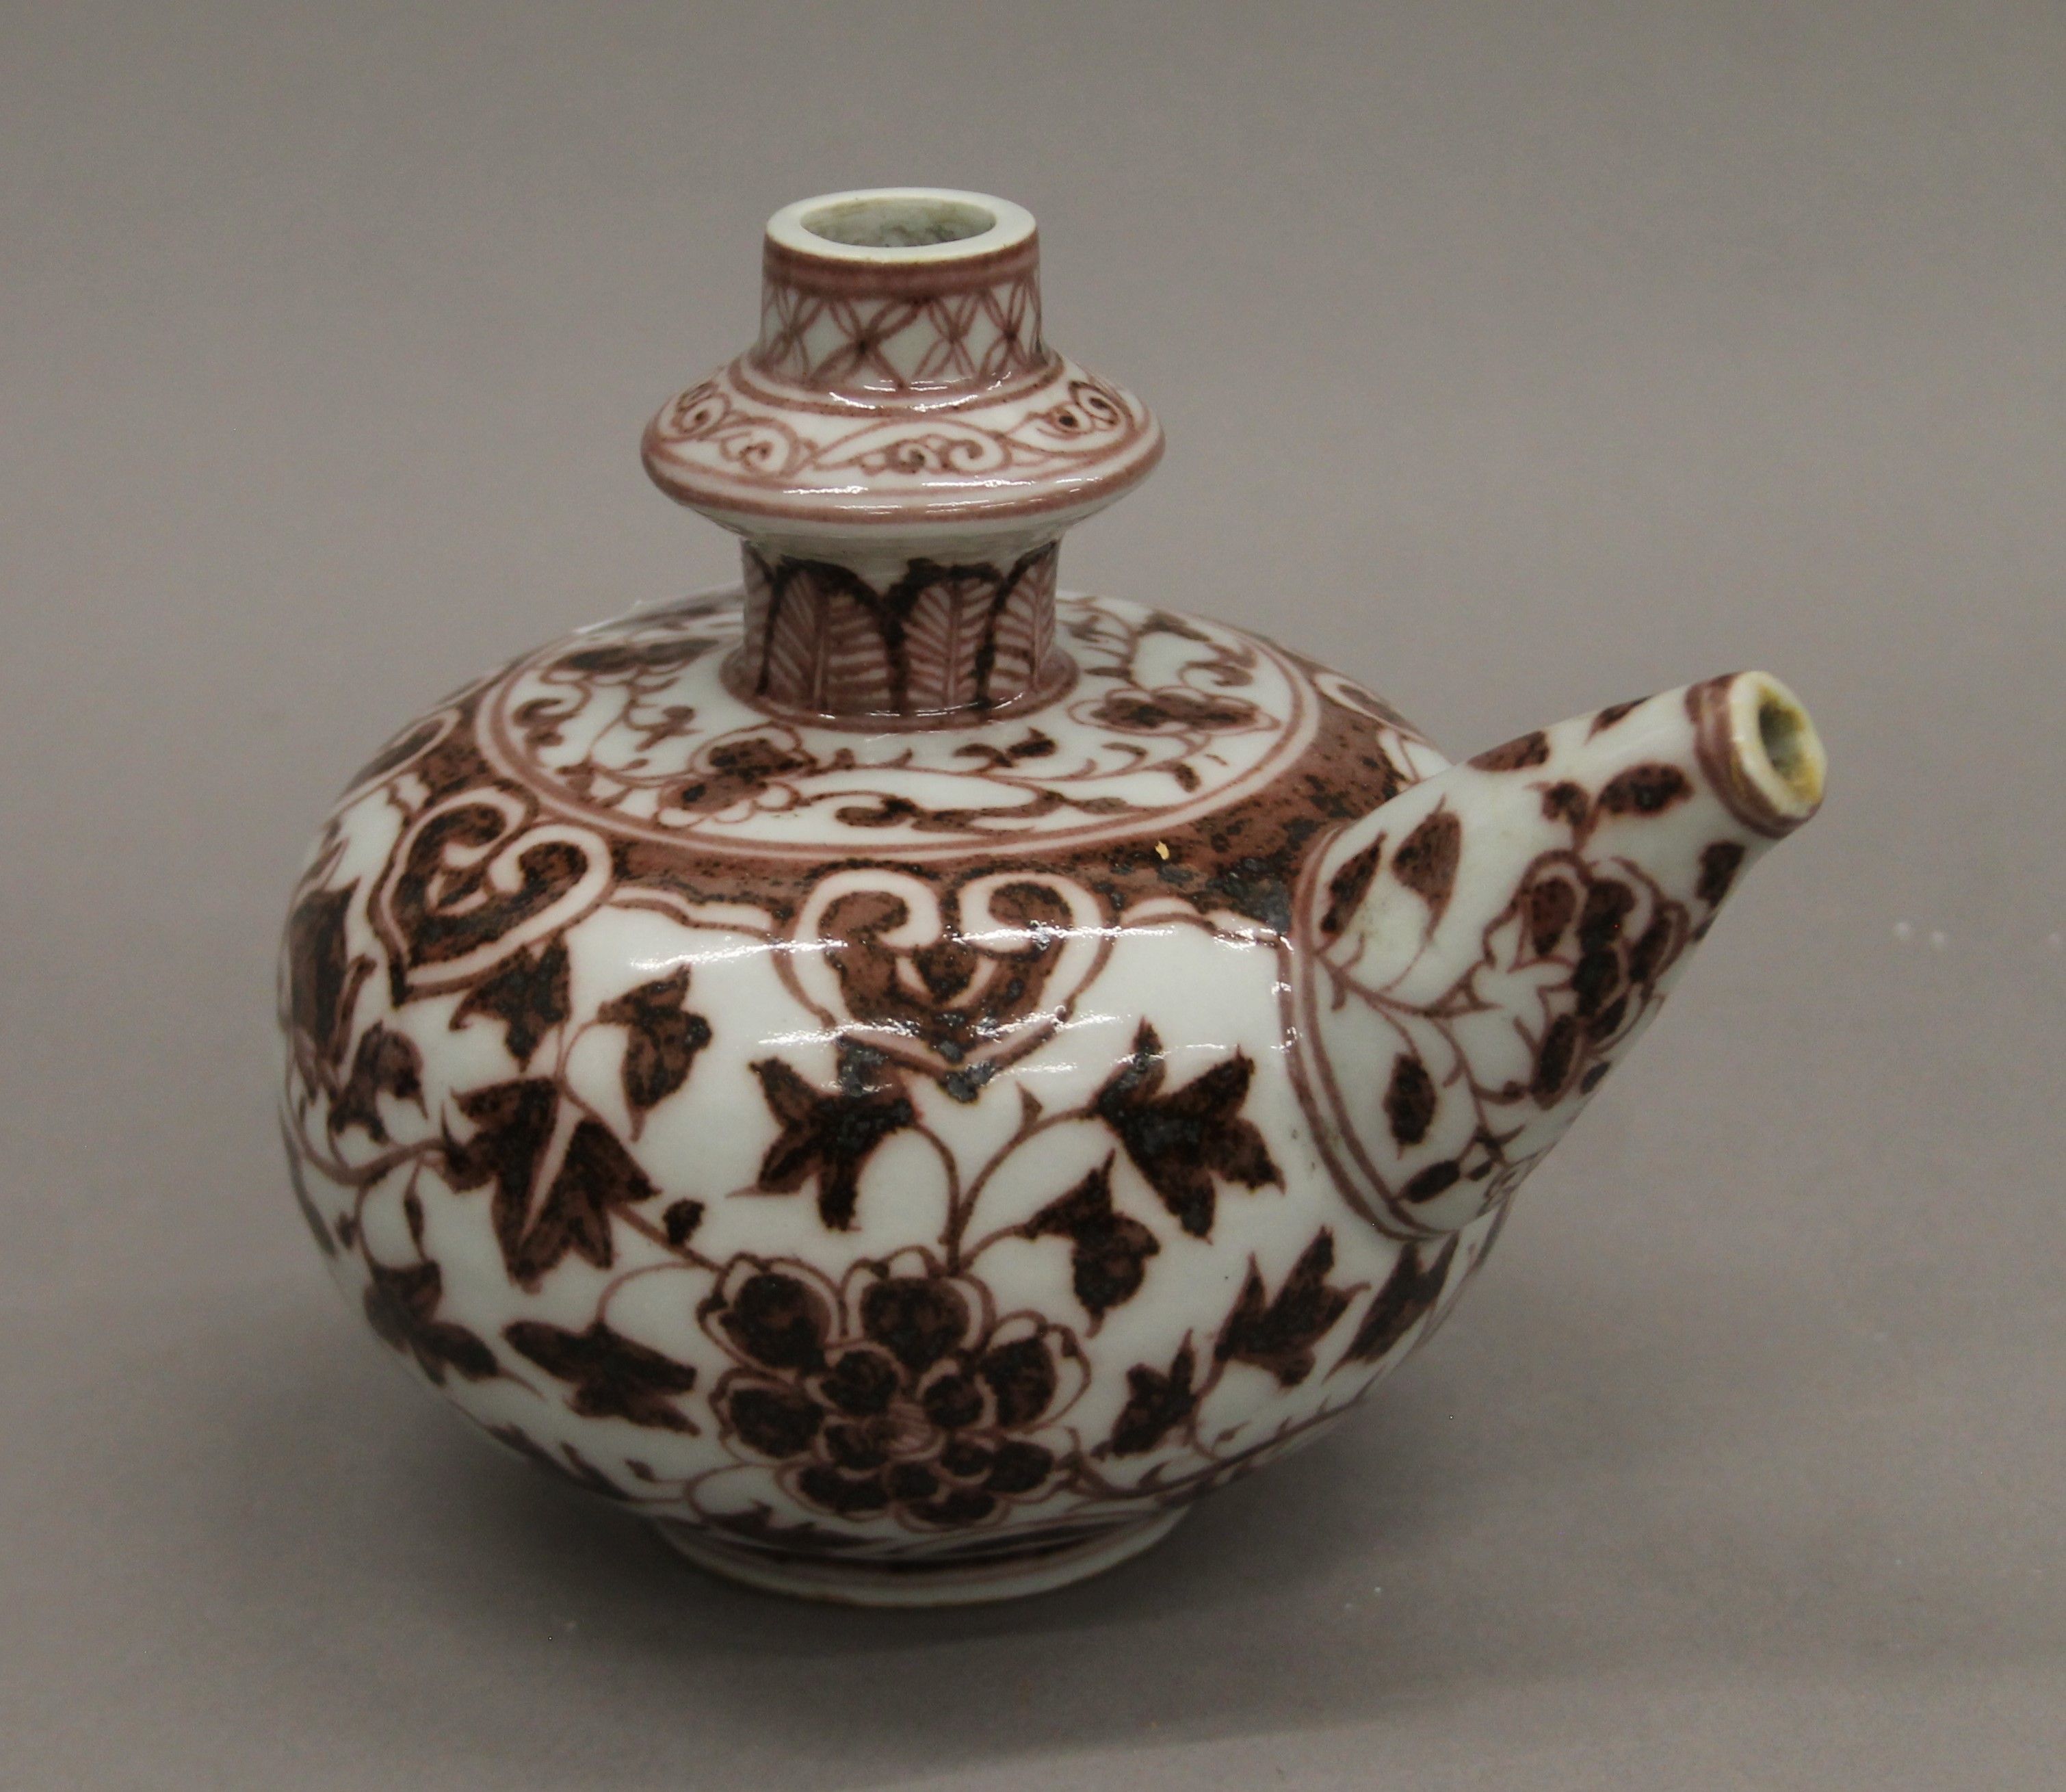 A Chinese porcelain wine ewer. 14 cm high.